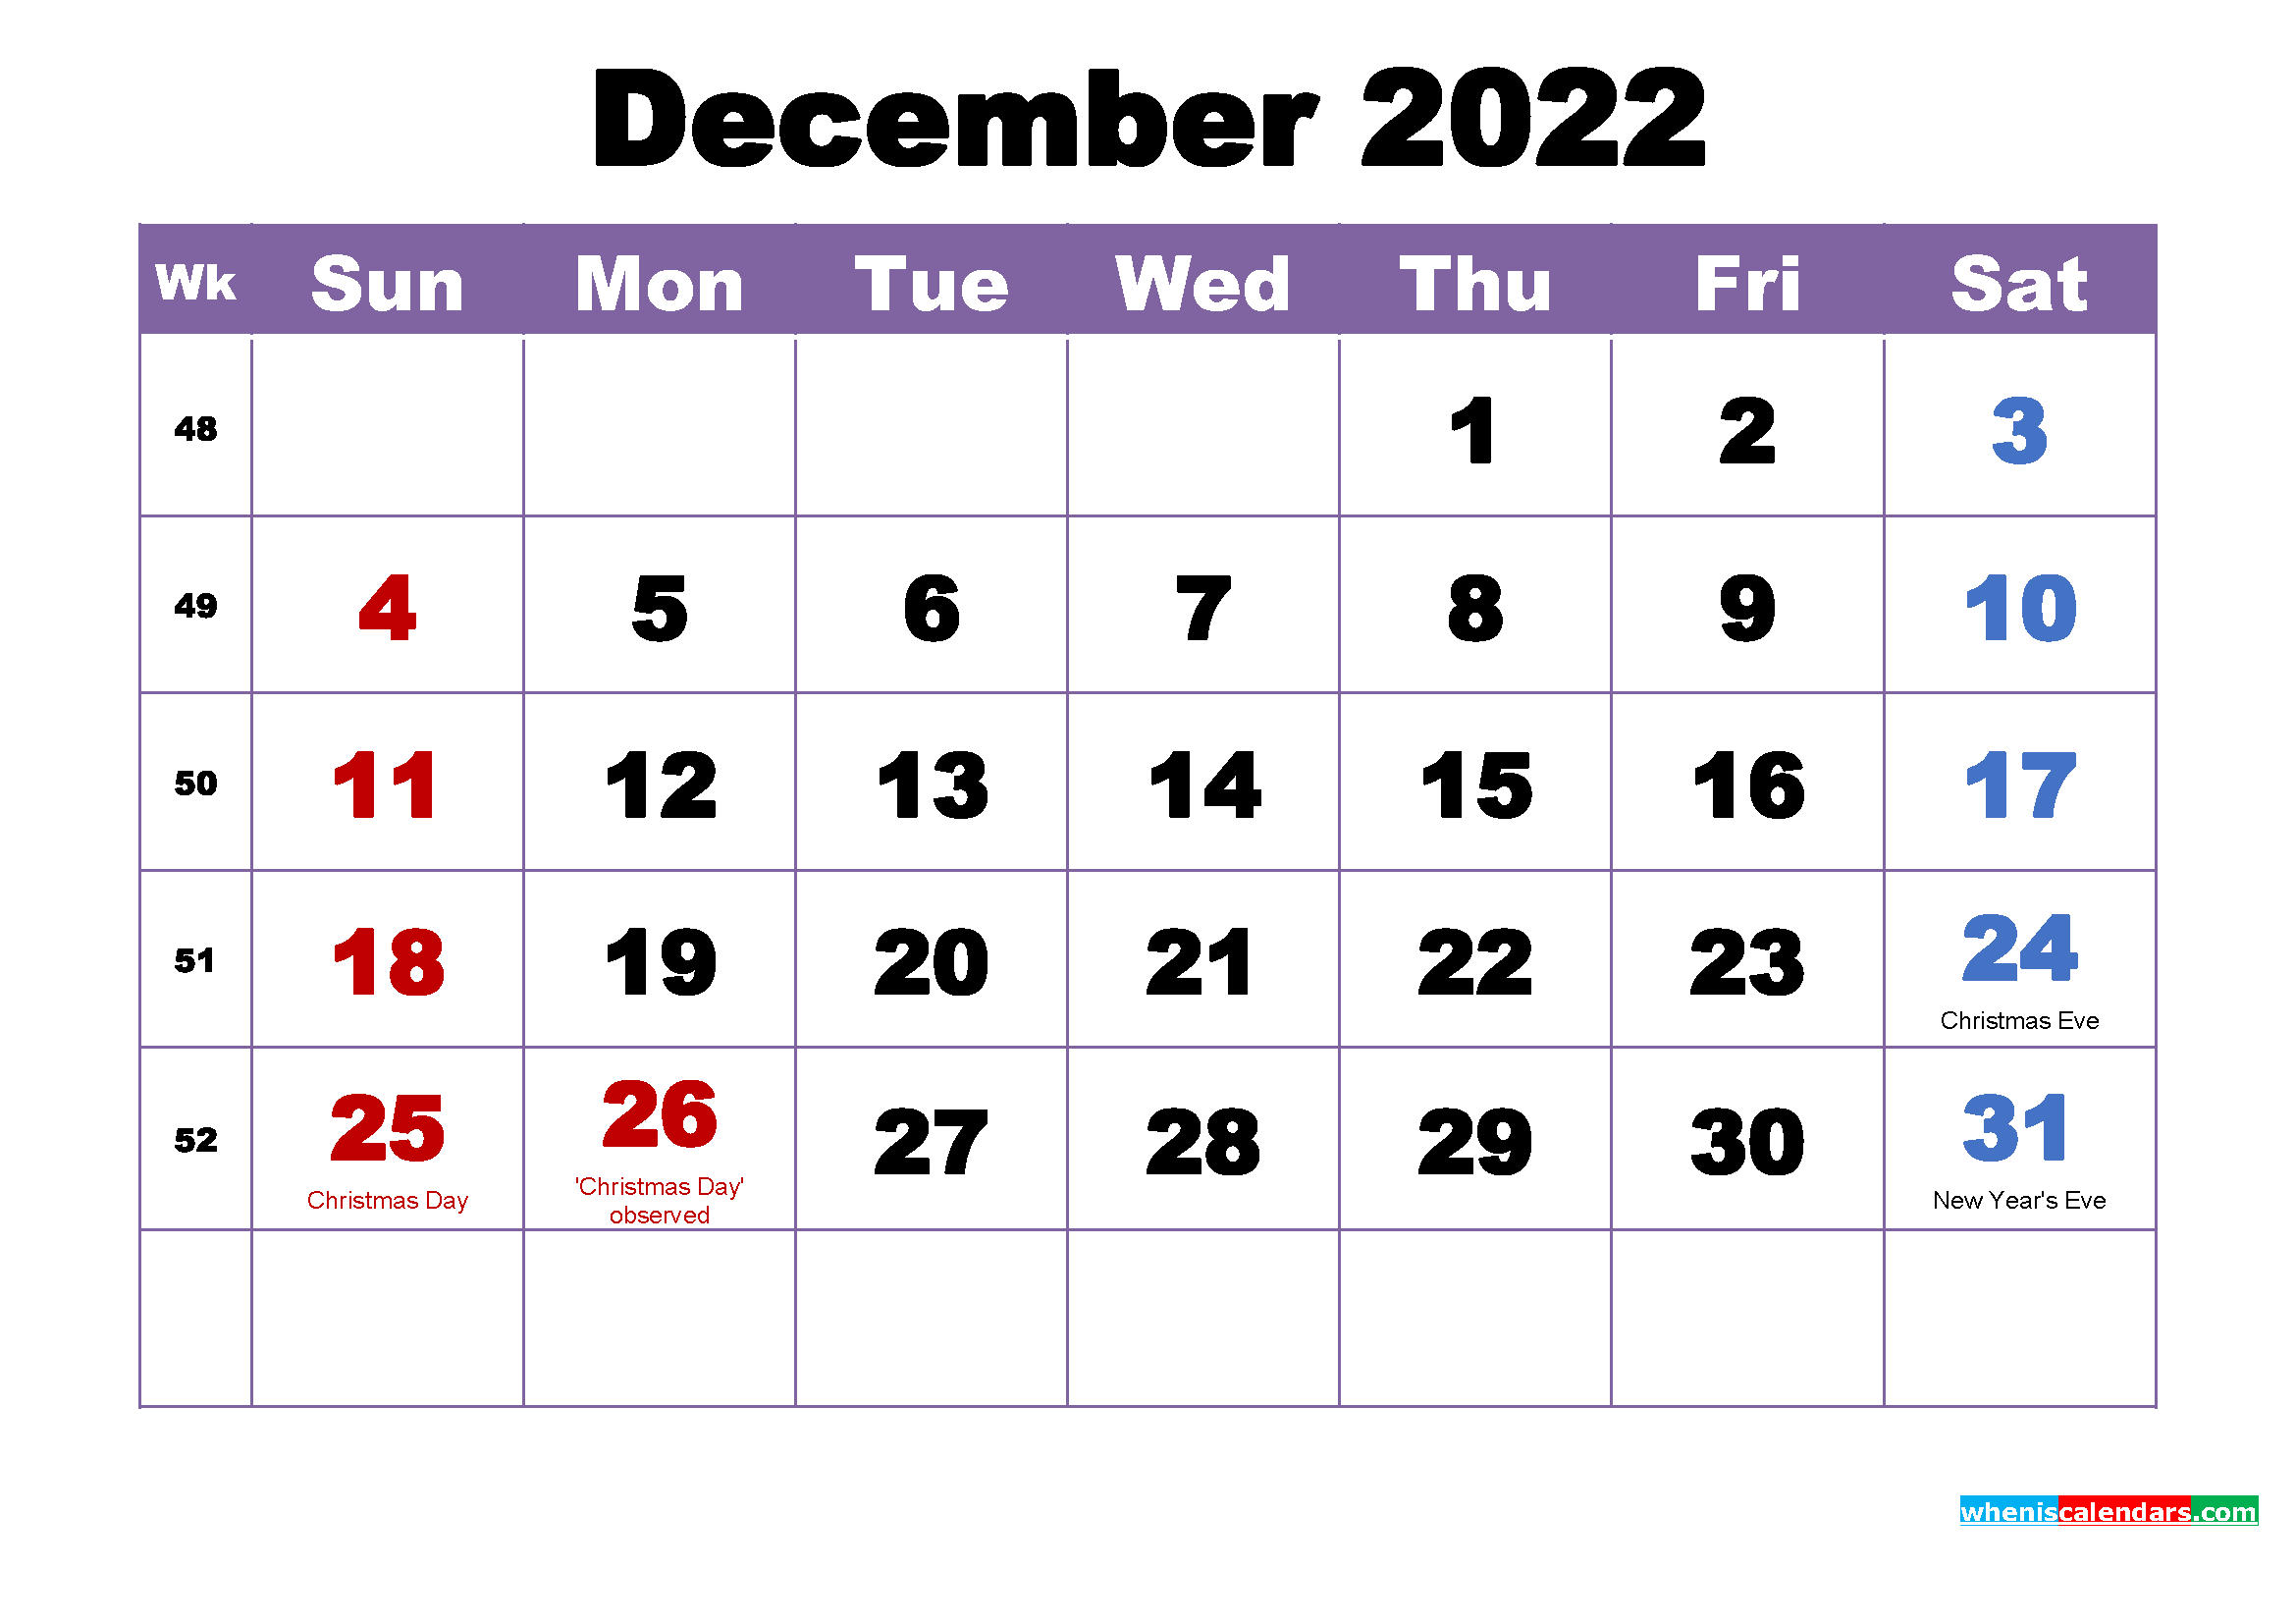 December 2022 Calendar Printable Free December 2022 Calendar With Holidays Printable